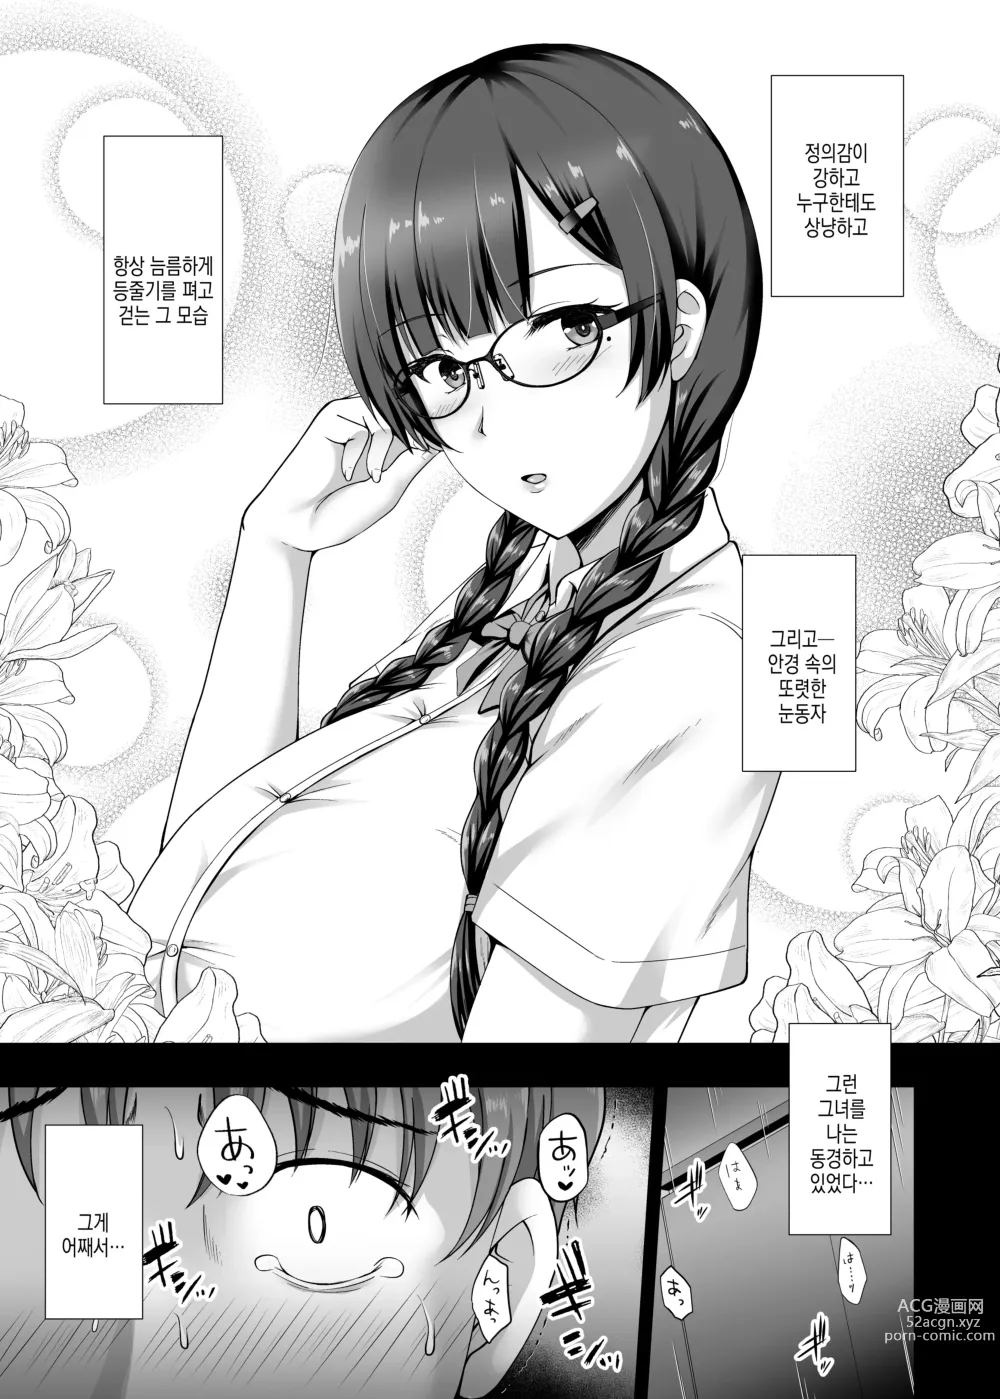 Page 4 of doujinshi 그녀가 안경을 벗은 이유 ~ 짝사랑하는 거유 위원장이 날라리 남친한테 물들 때까지 ~